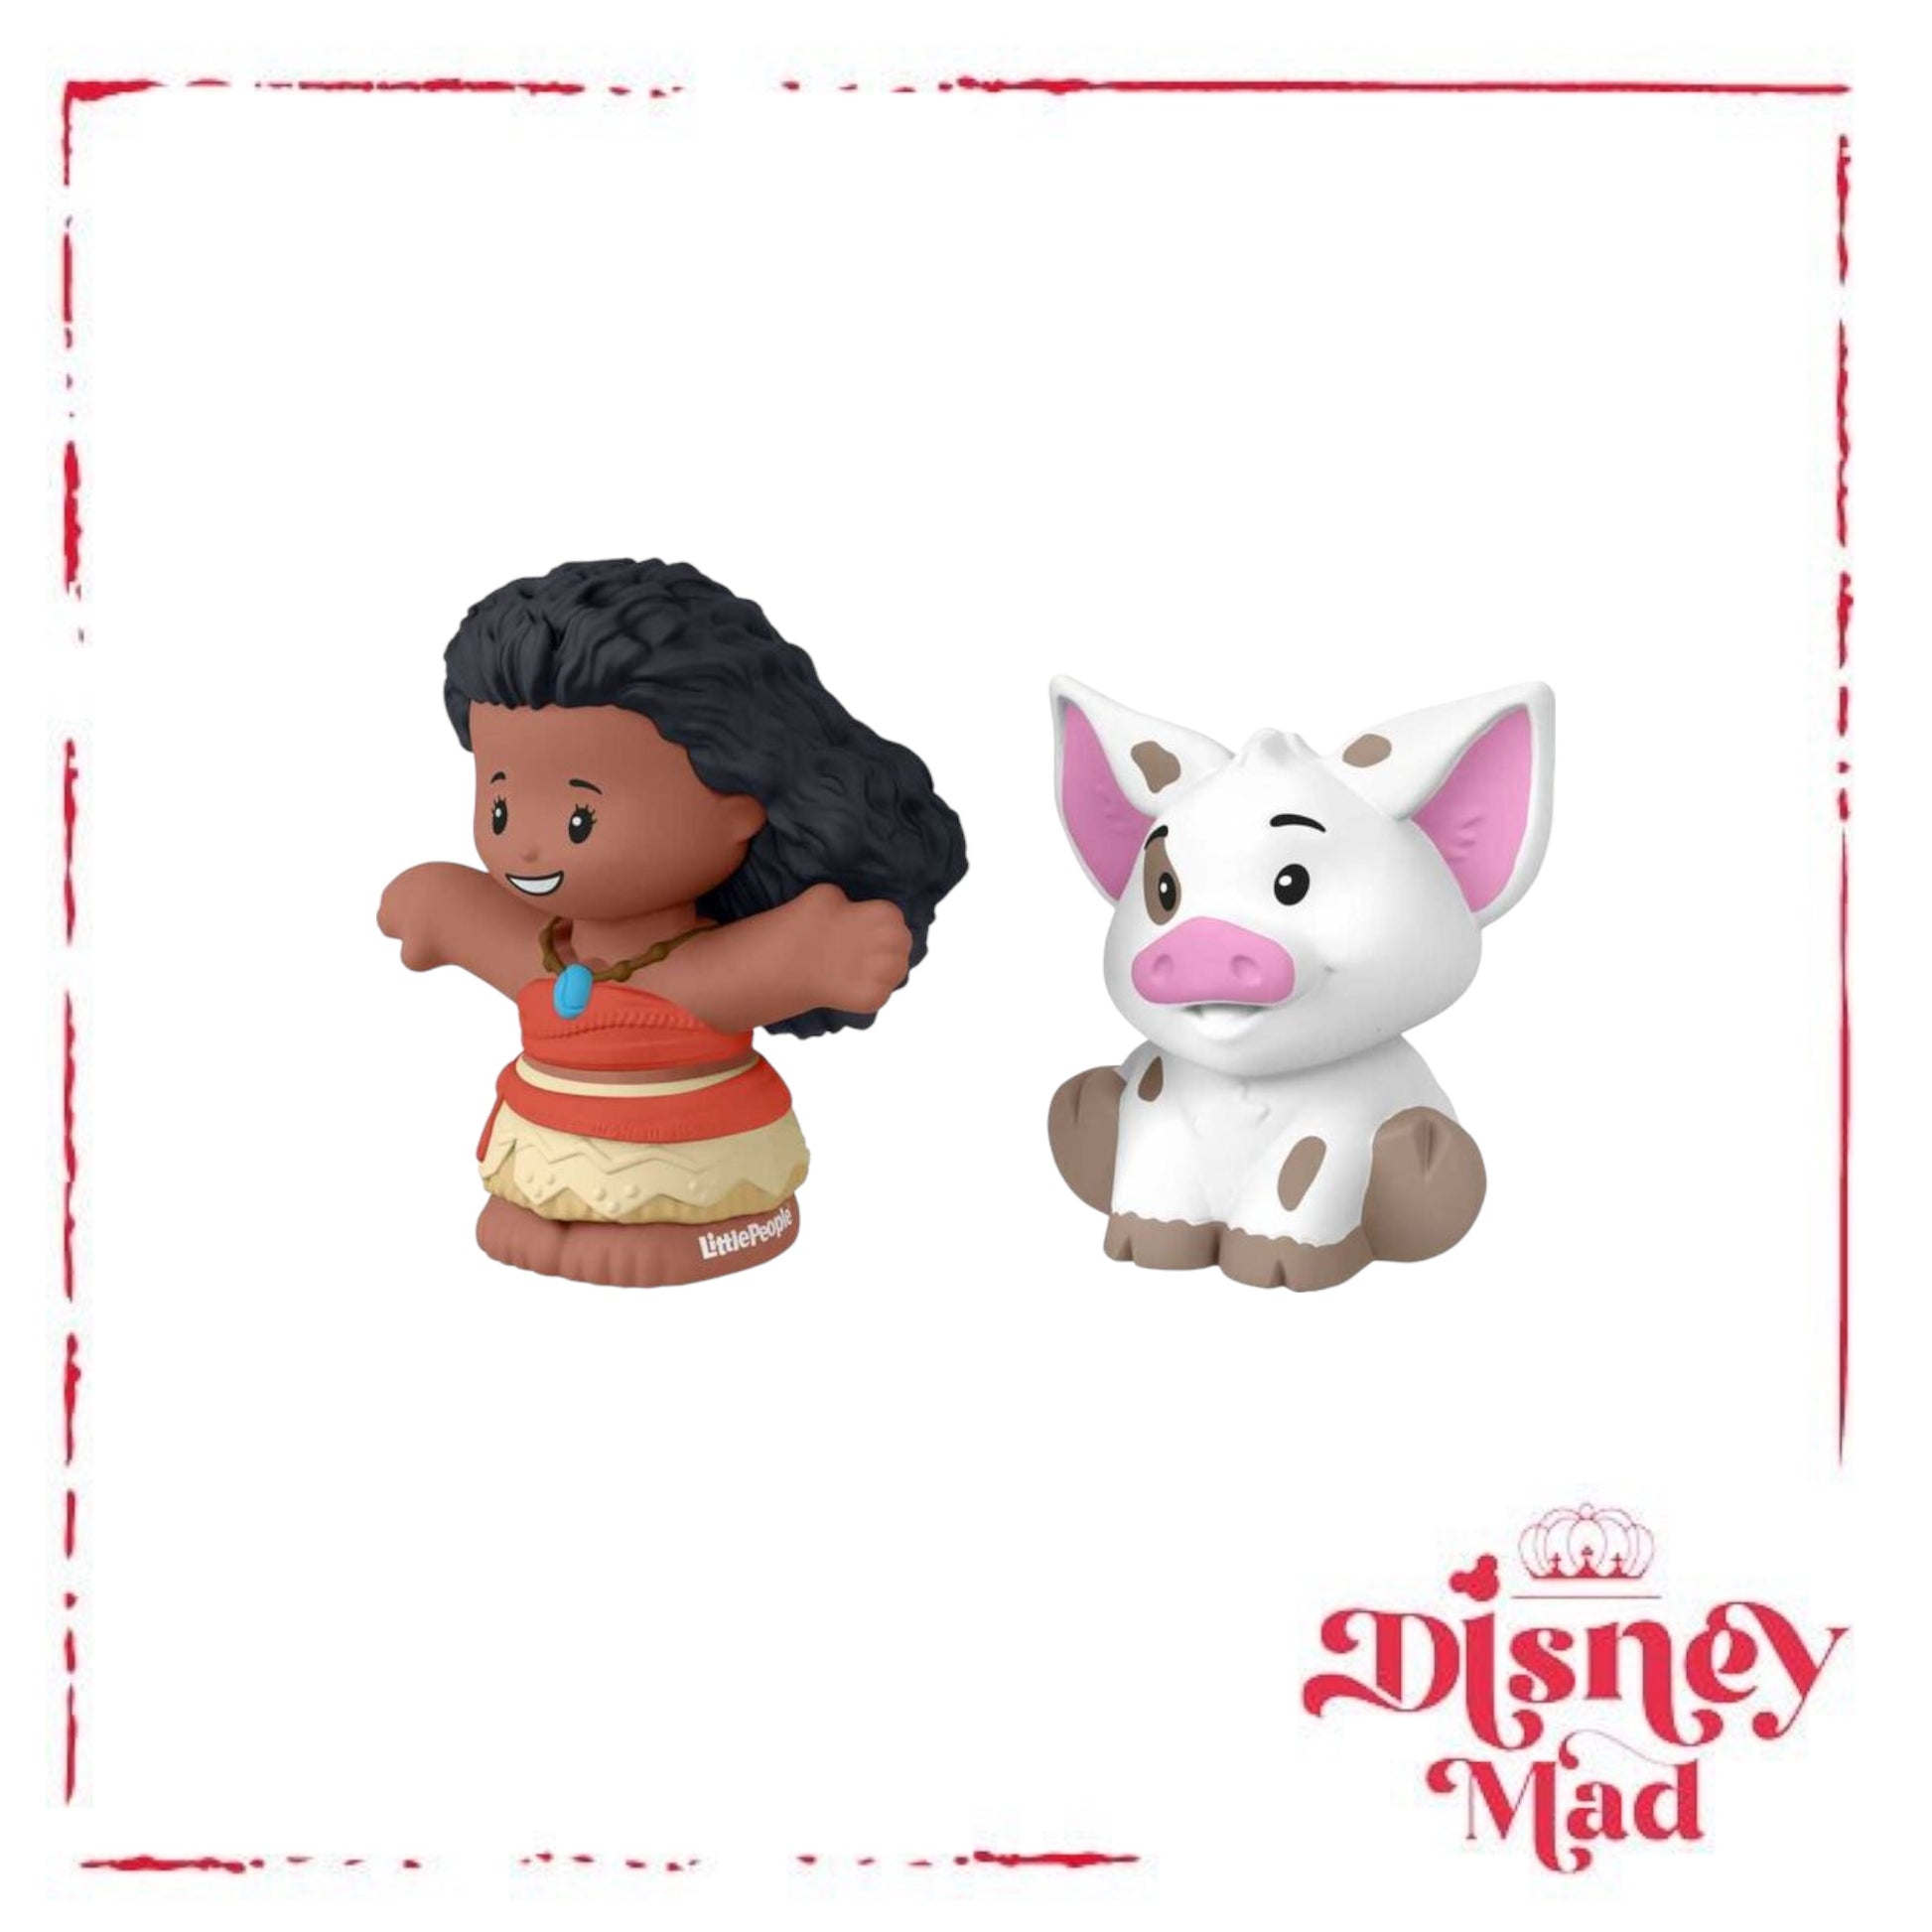 Disney Princess Moana & Pua, Little People Toys